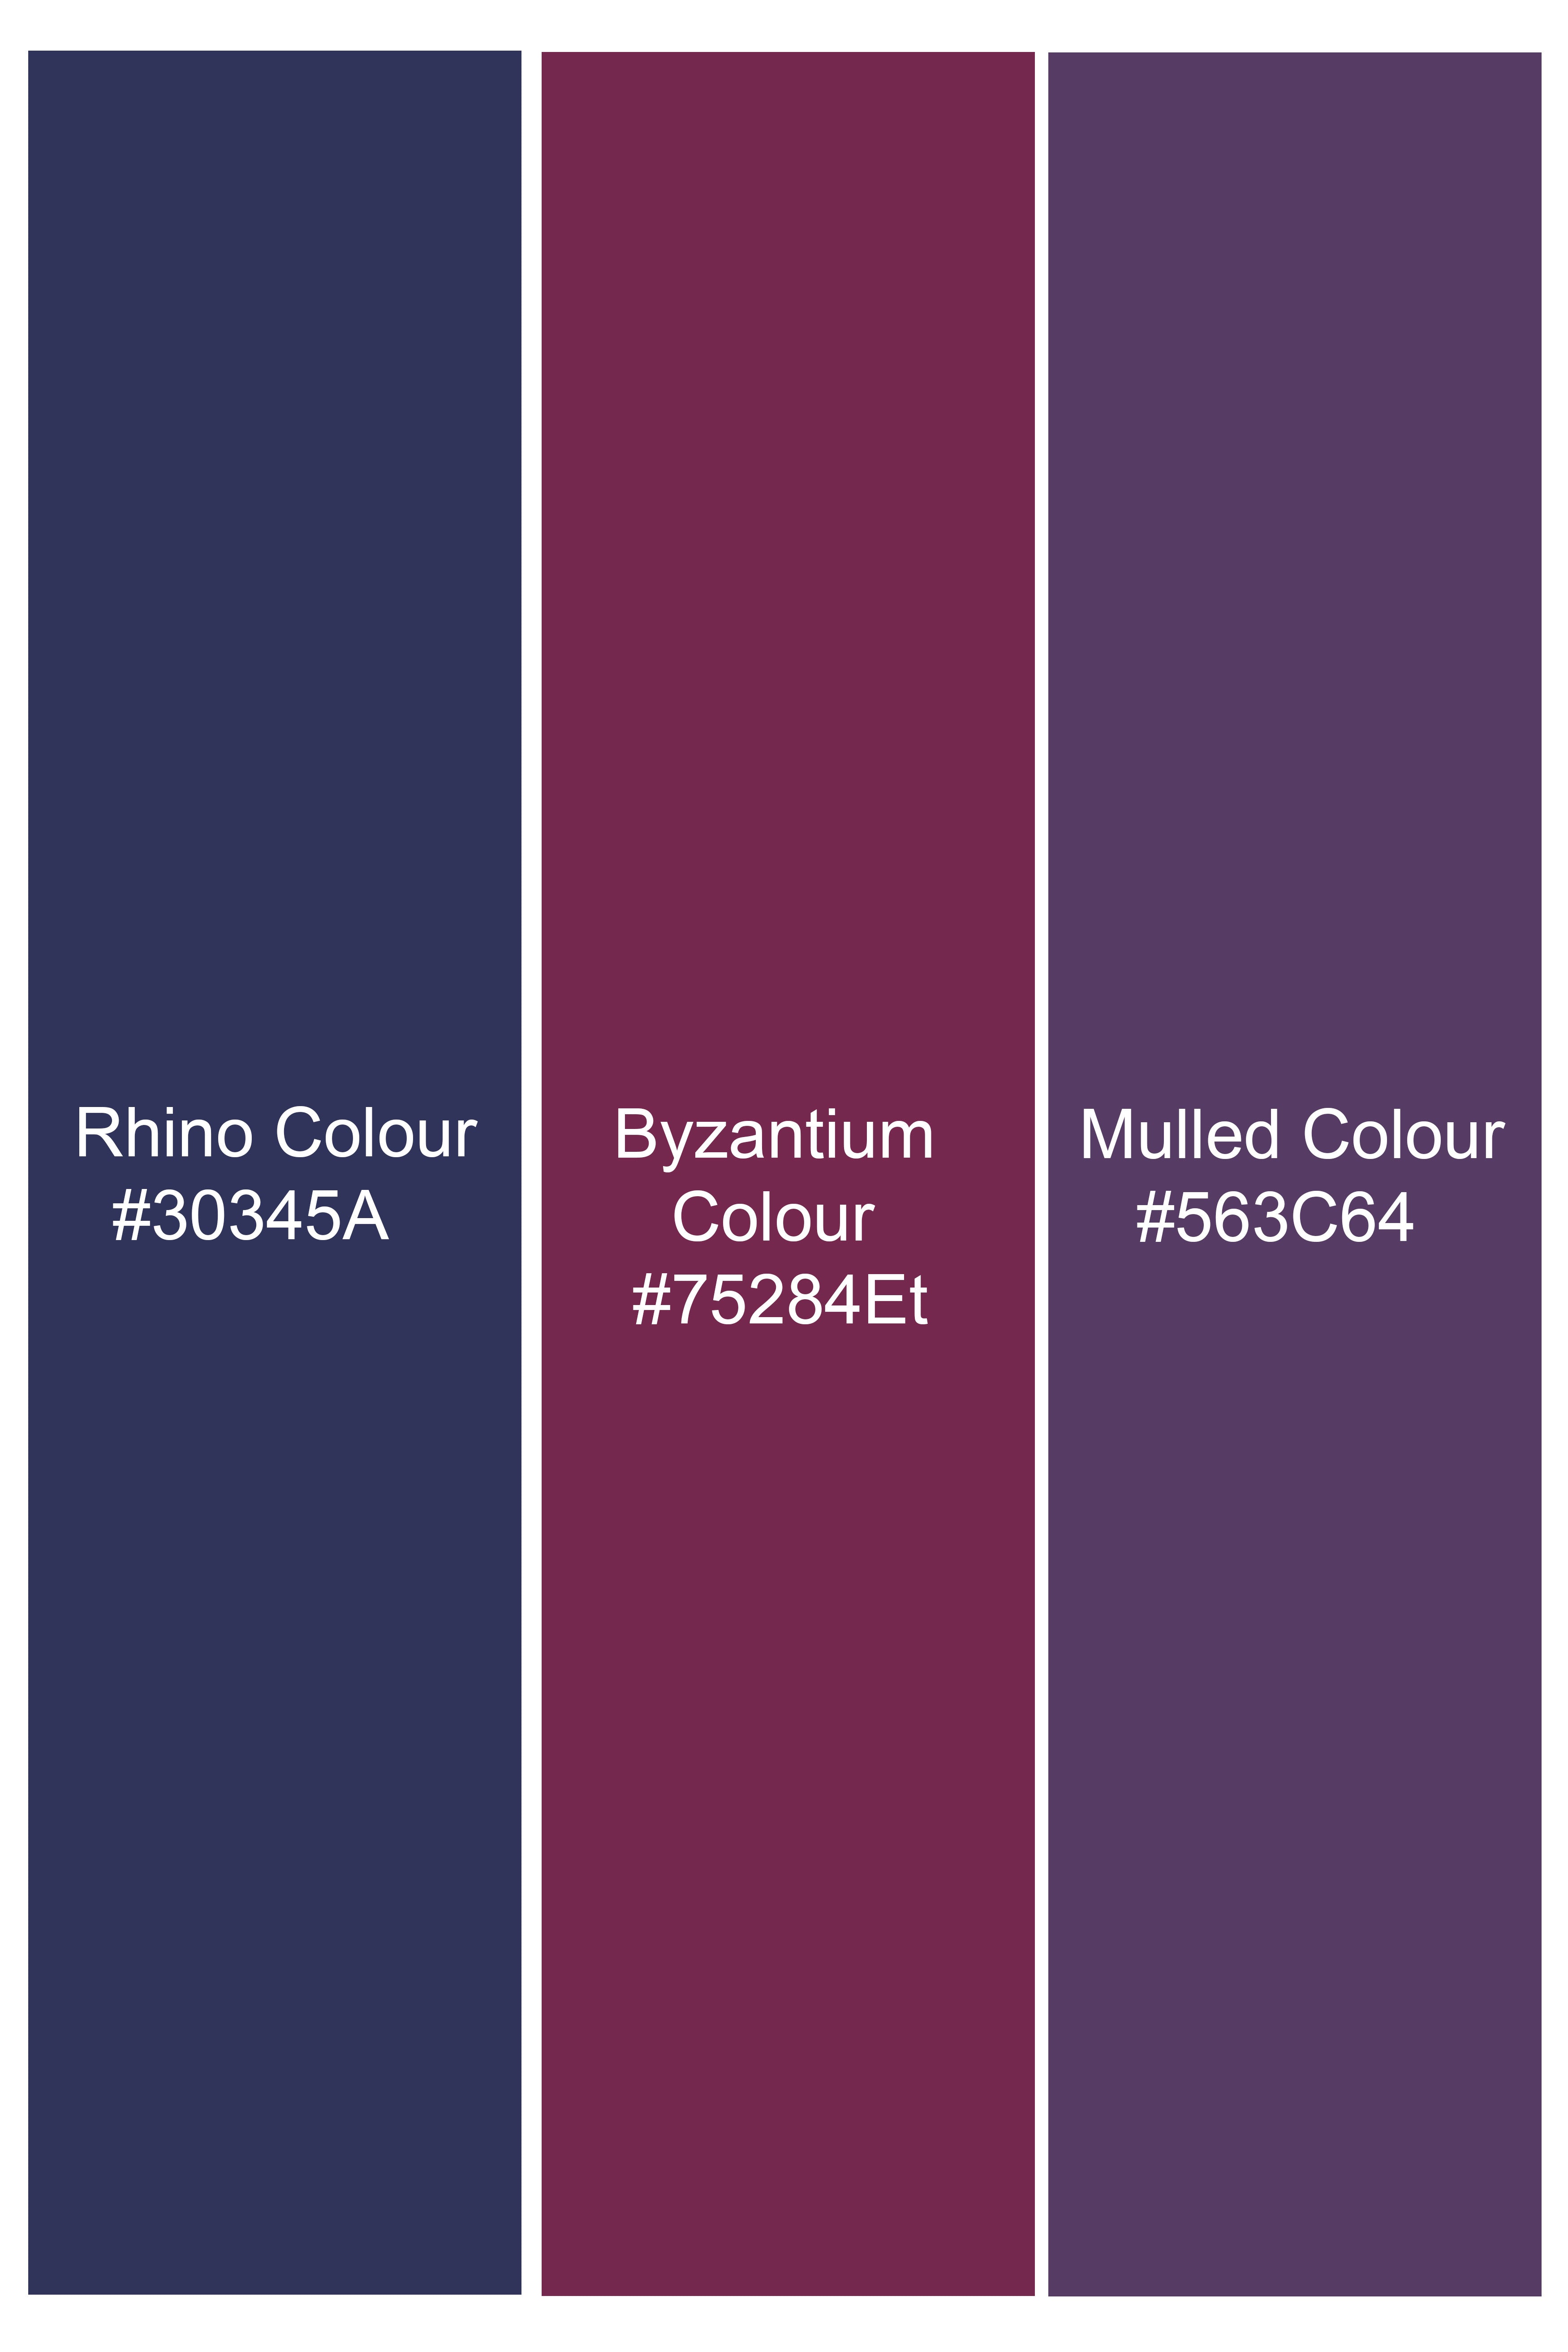 Rhino Blue with Byzantium Pink Striped Chambray Shorts SR366-28, SR366-30, SR366-32, SR366-34, SR366-36, SR366-38, SR366-40, SR366-42, SR366-44